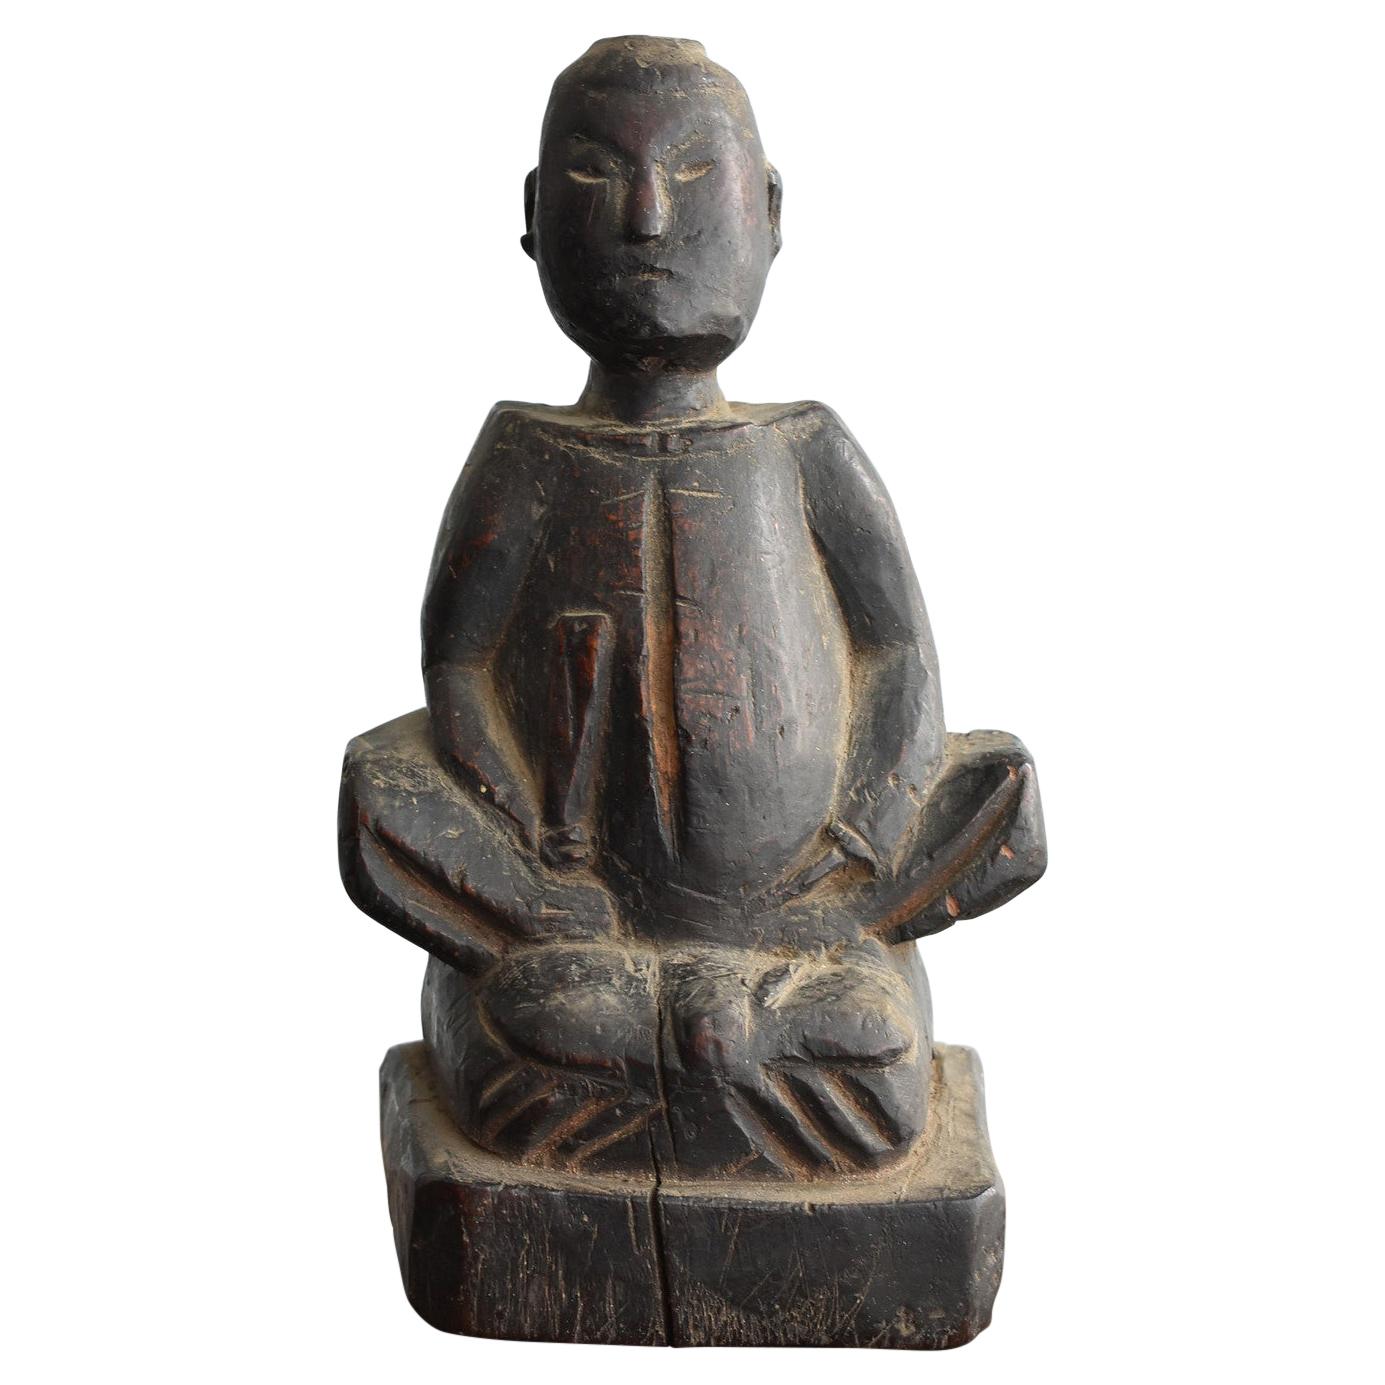 Japanese Old Wooden Statues of God / Buddha statue / Wooden Dolls/Edo-Meiji